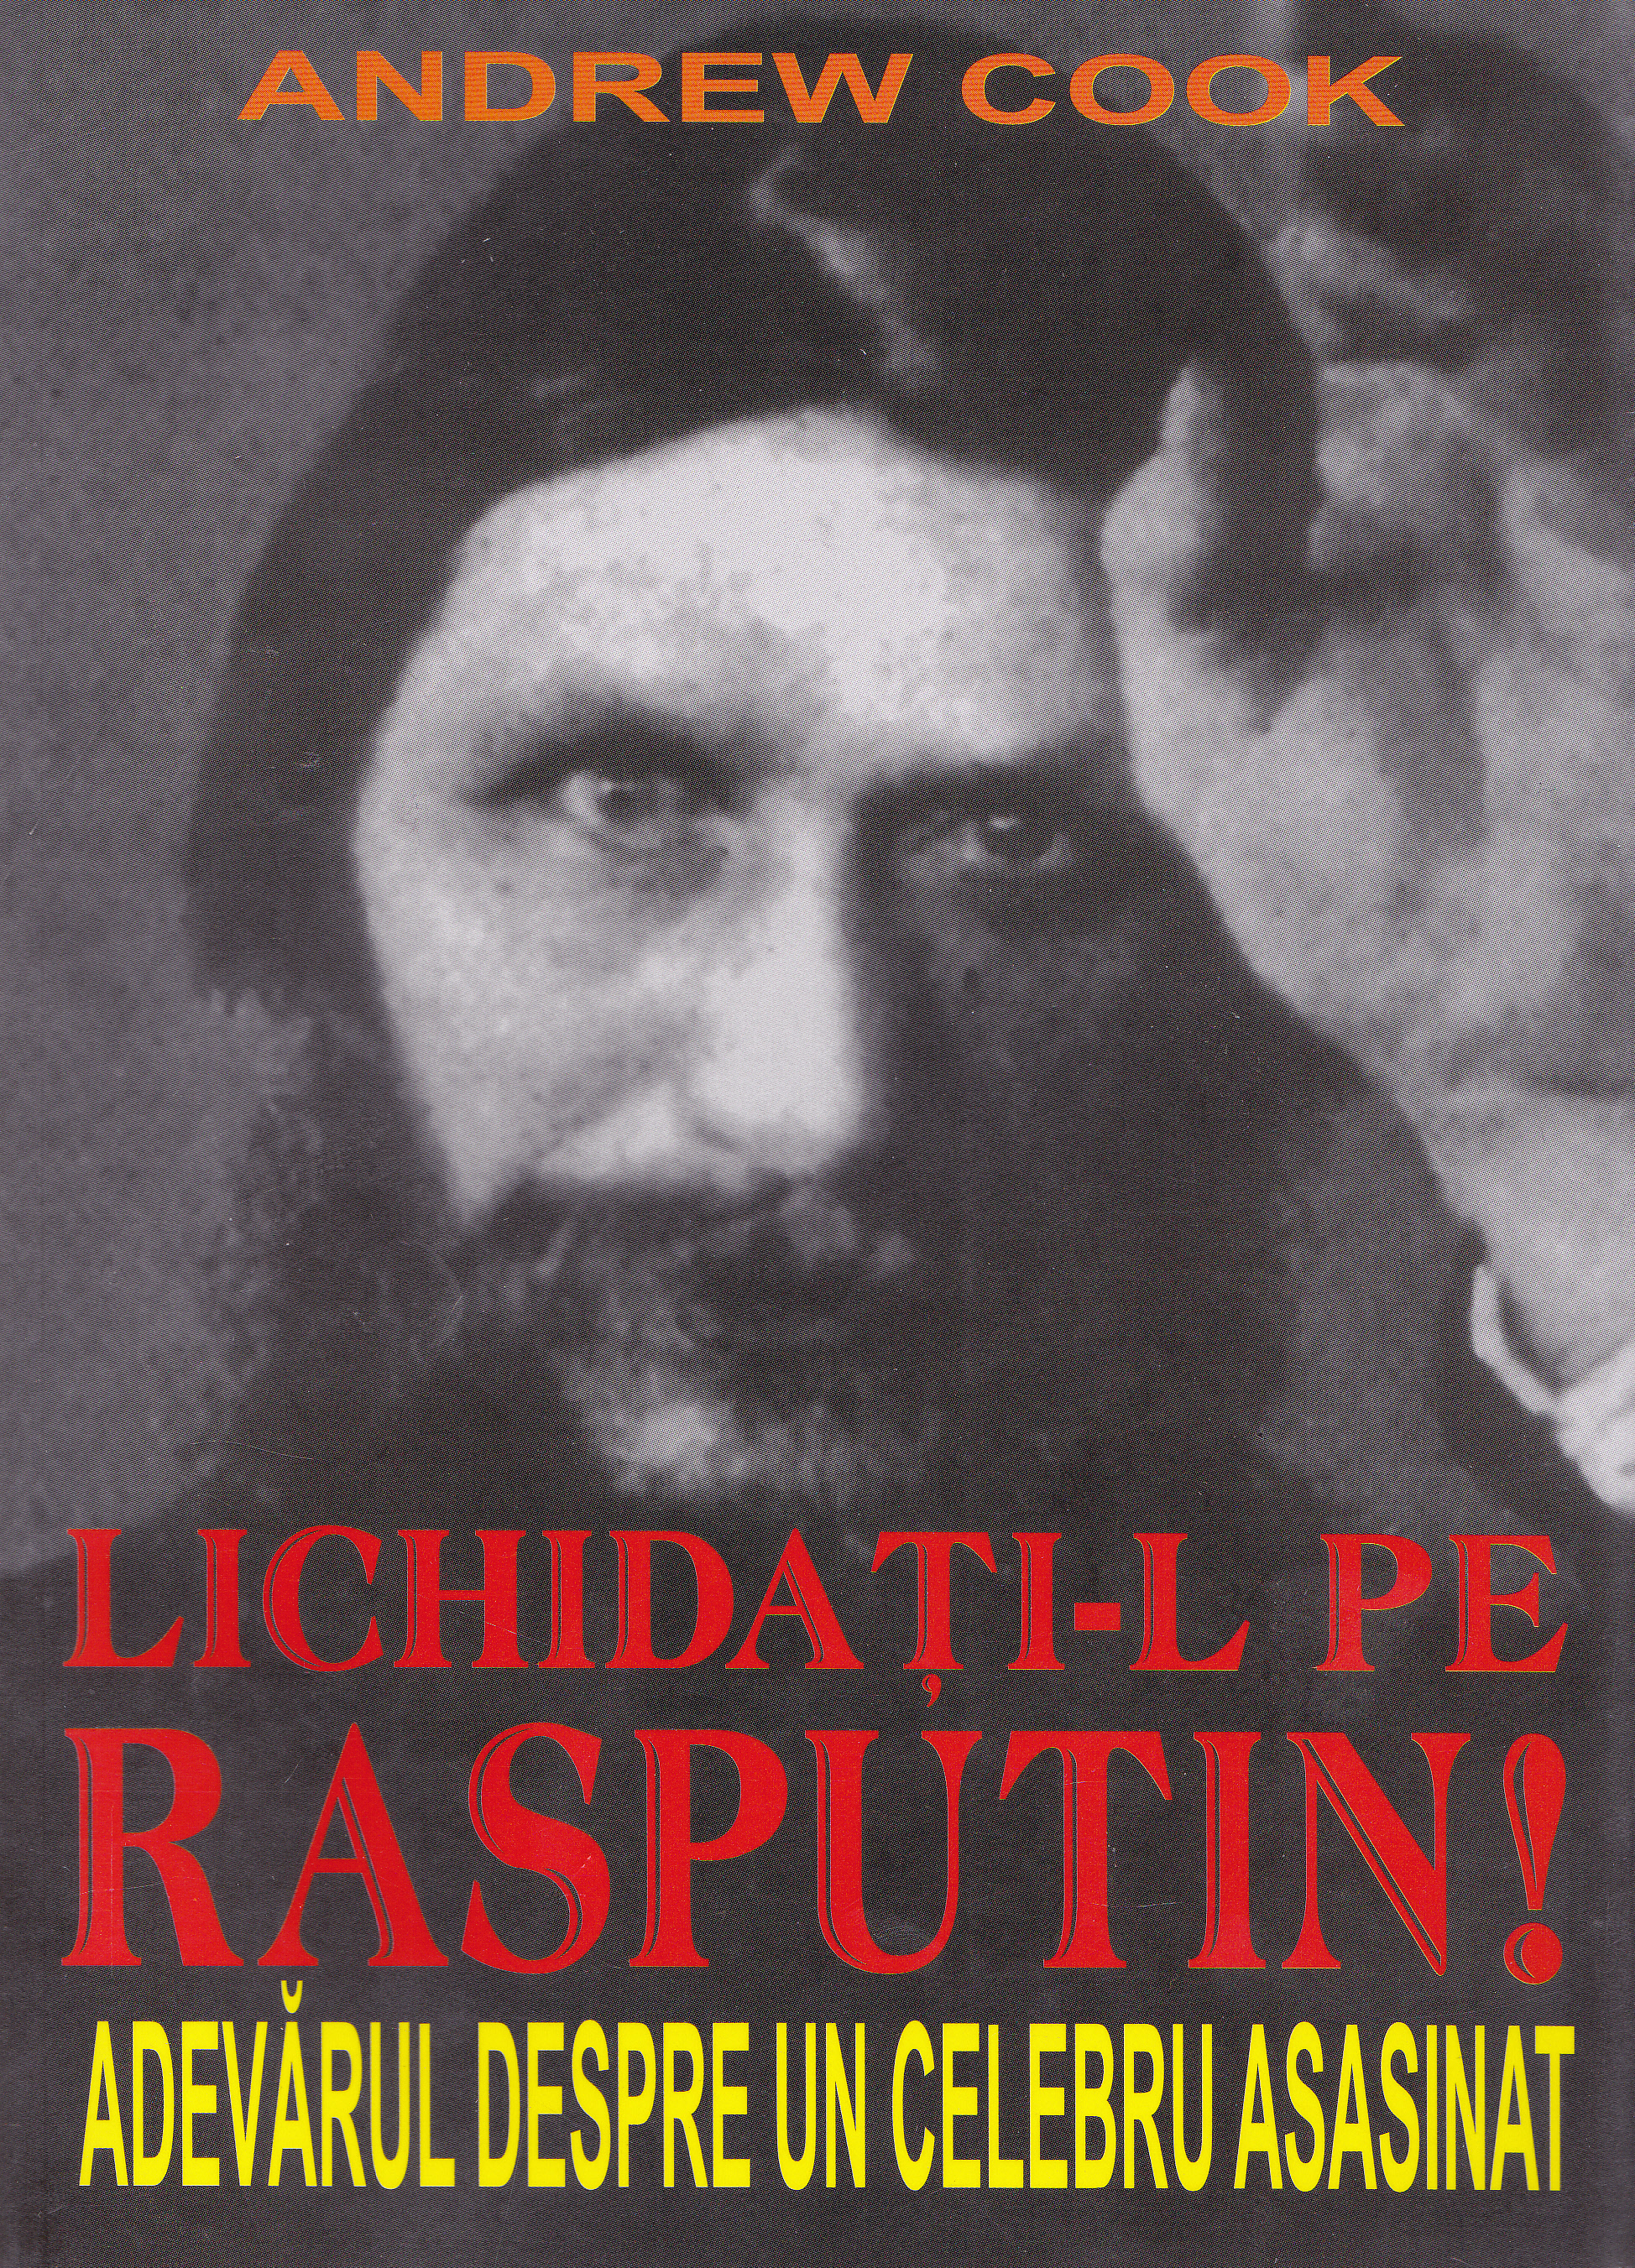 Lichidati-l pe Rasputin! - Andrew Cook